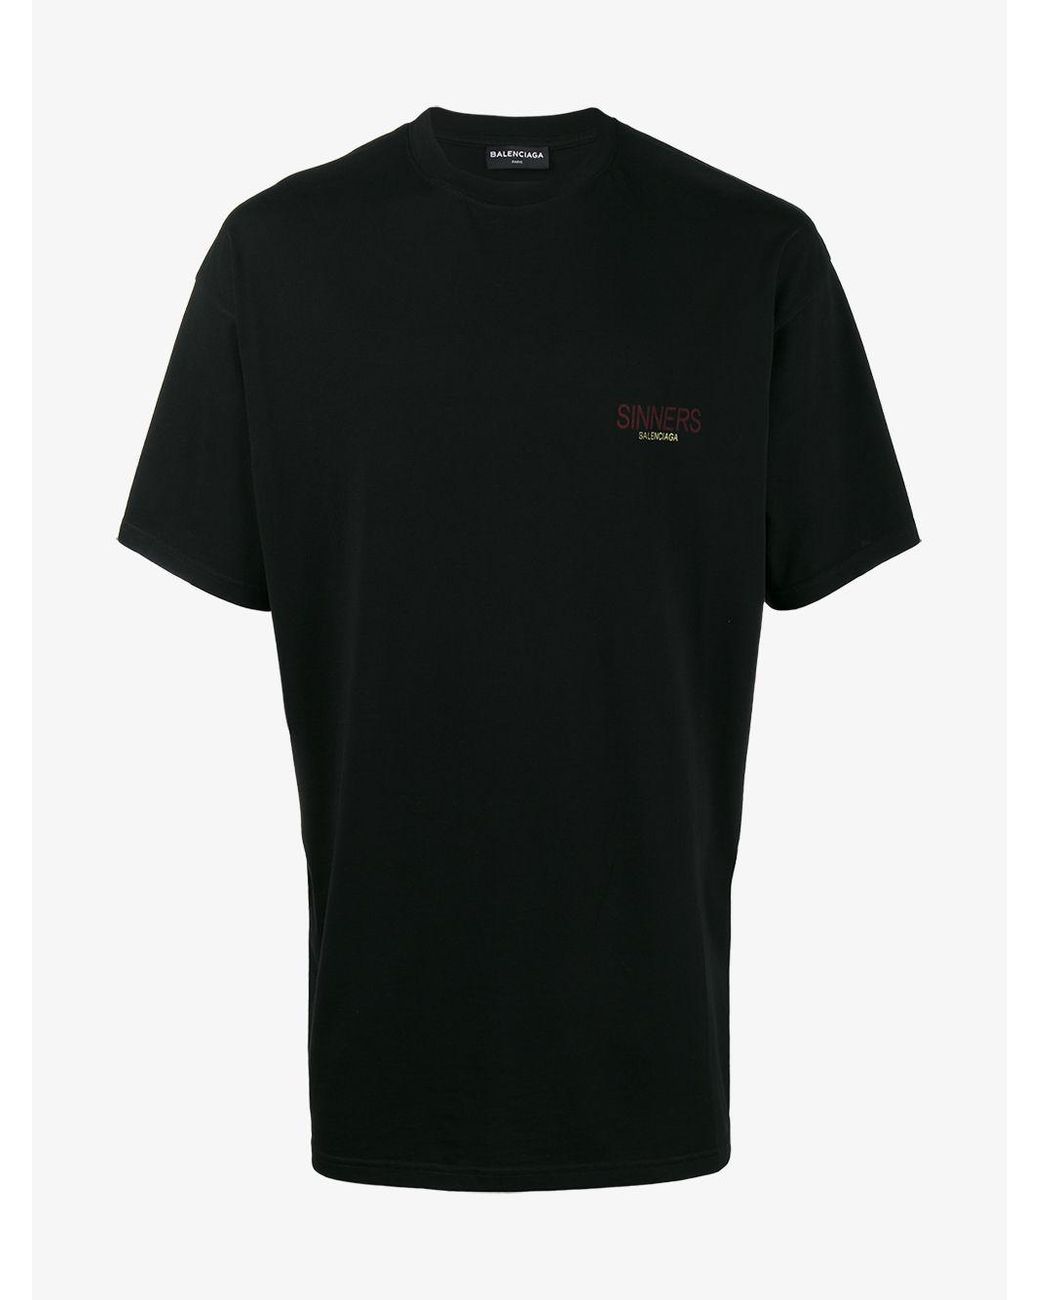 Balenciaga Cotton Sinners T-shirt in Black for Men | Lyst